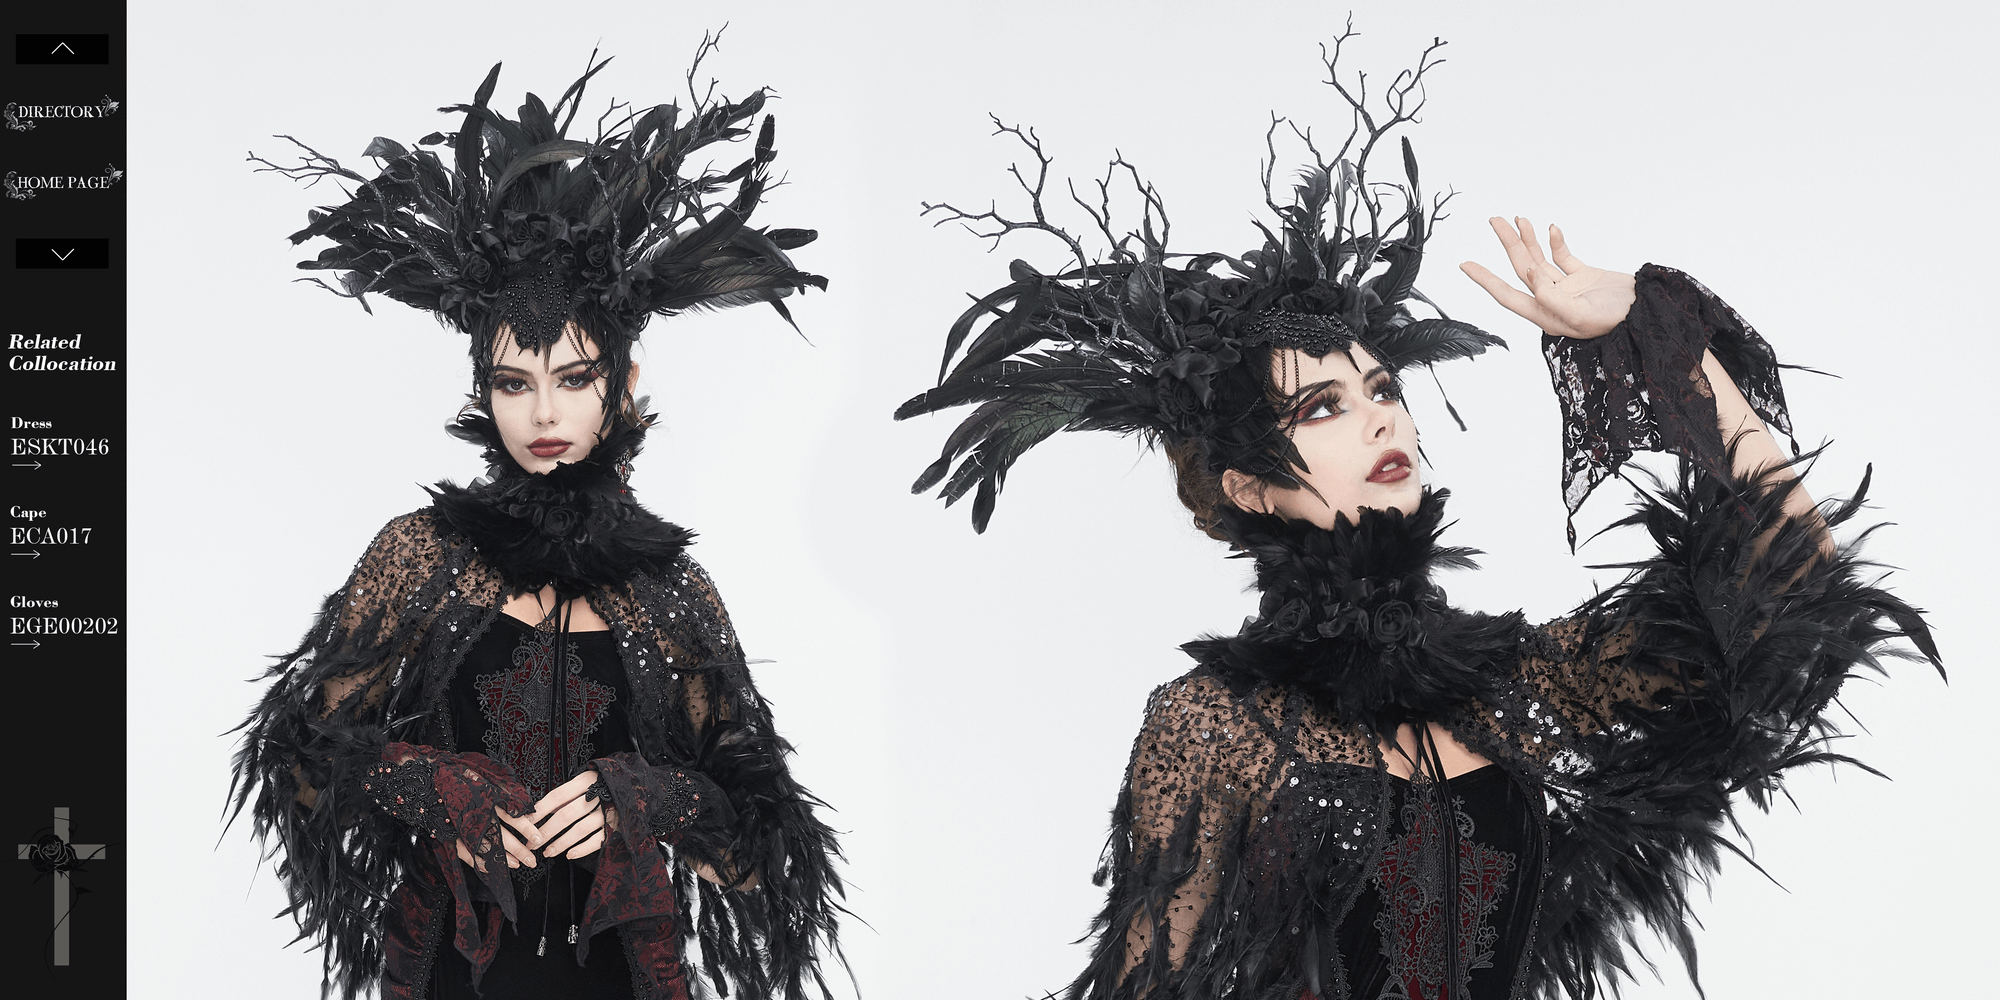 Corona de plumas gótica negra con detalles florales